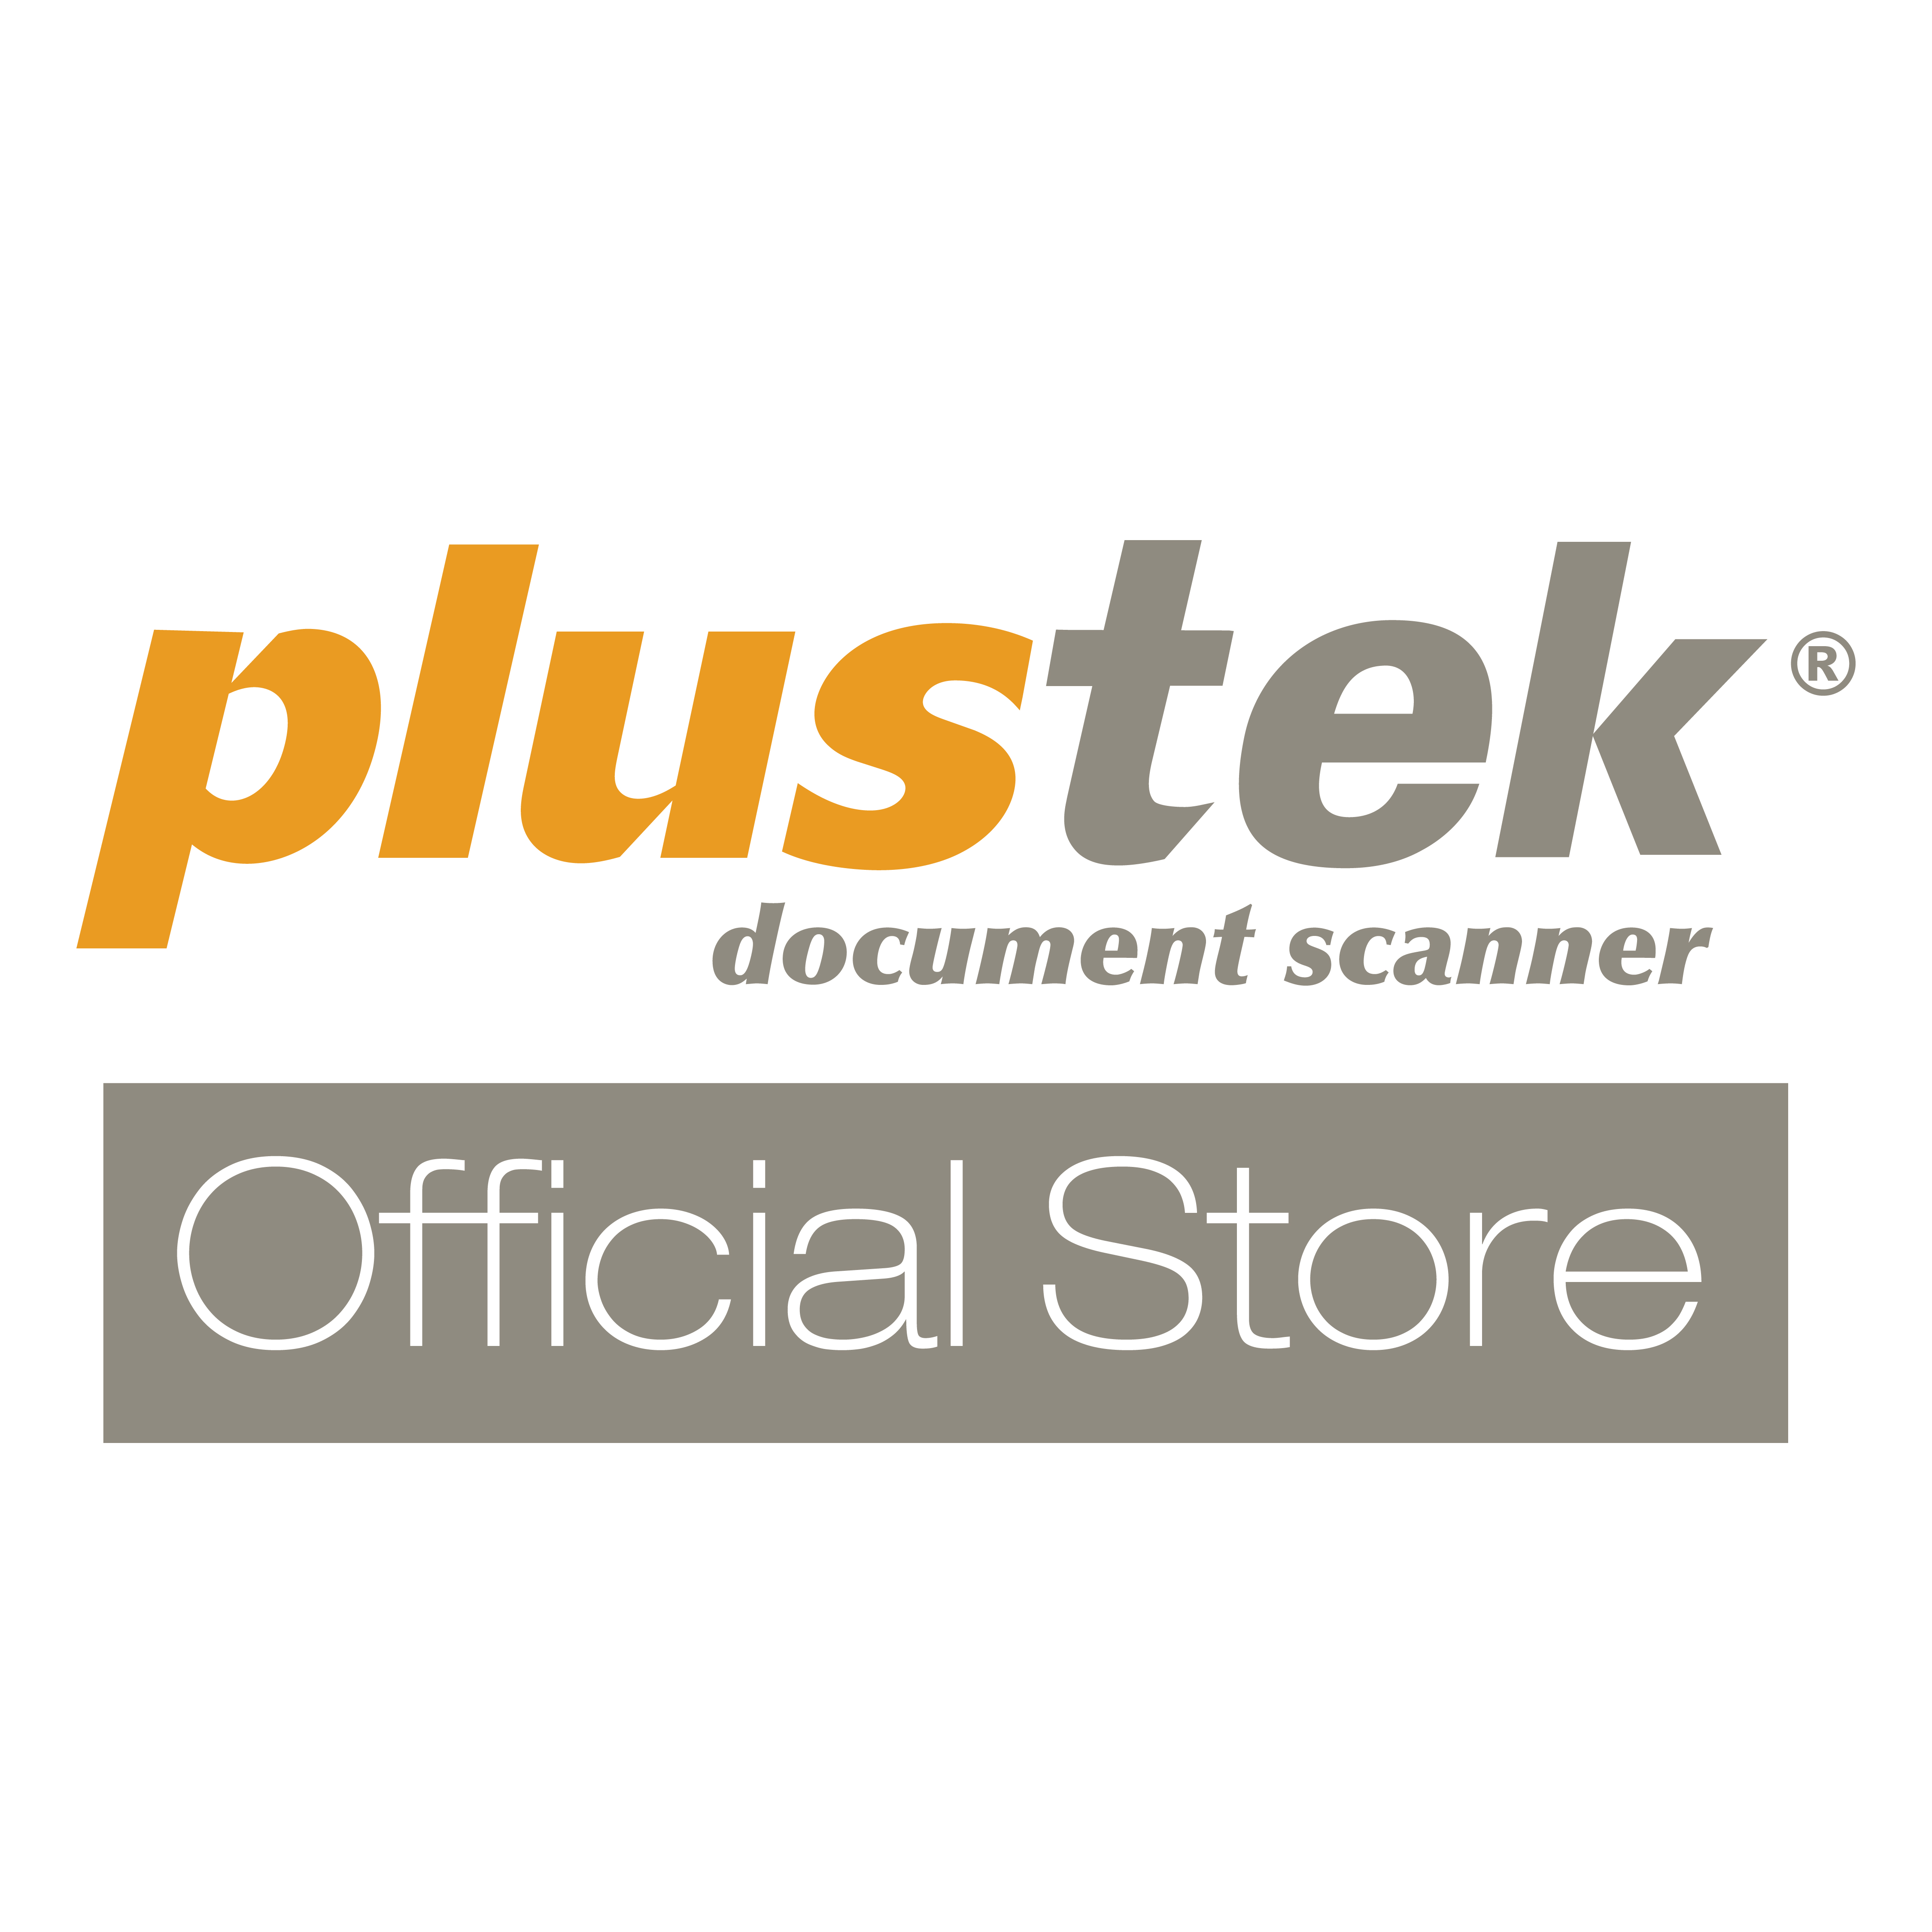 Scanner Plustek Indonesia Official Store